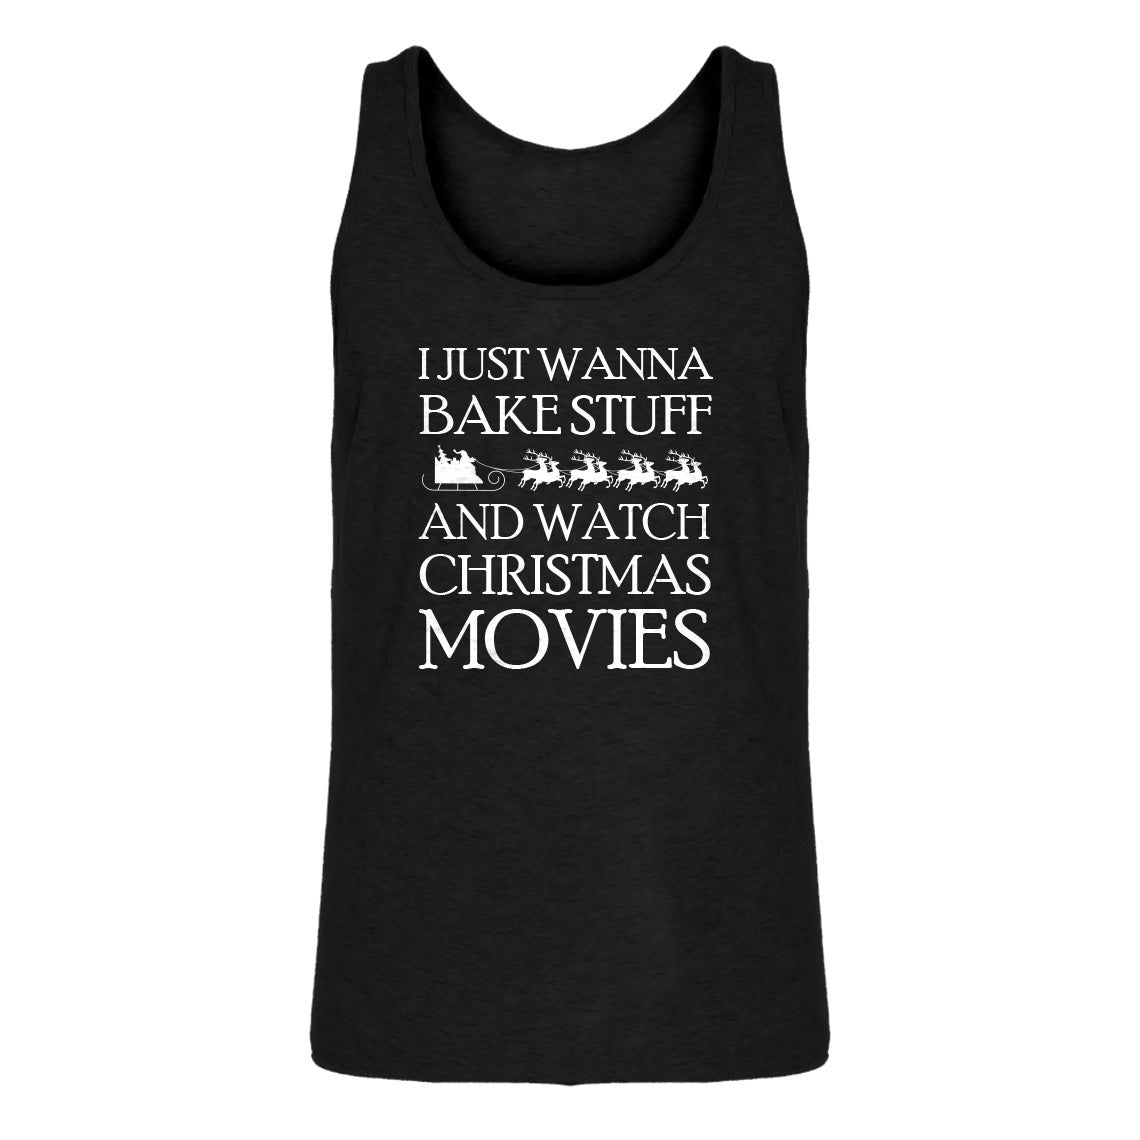 Mens Bake Stuff, Christmas Movies Jersey Tank Top